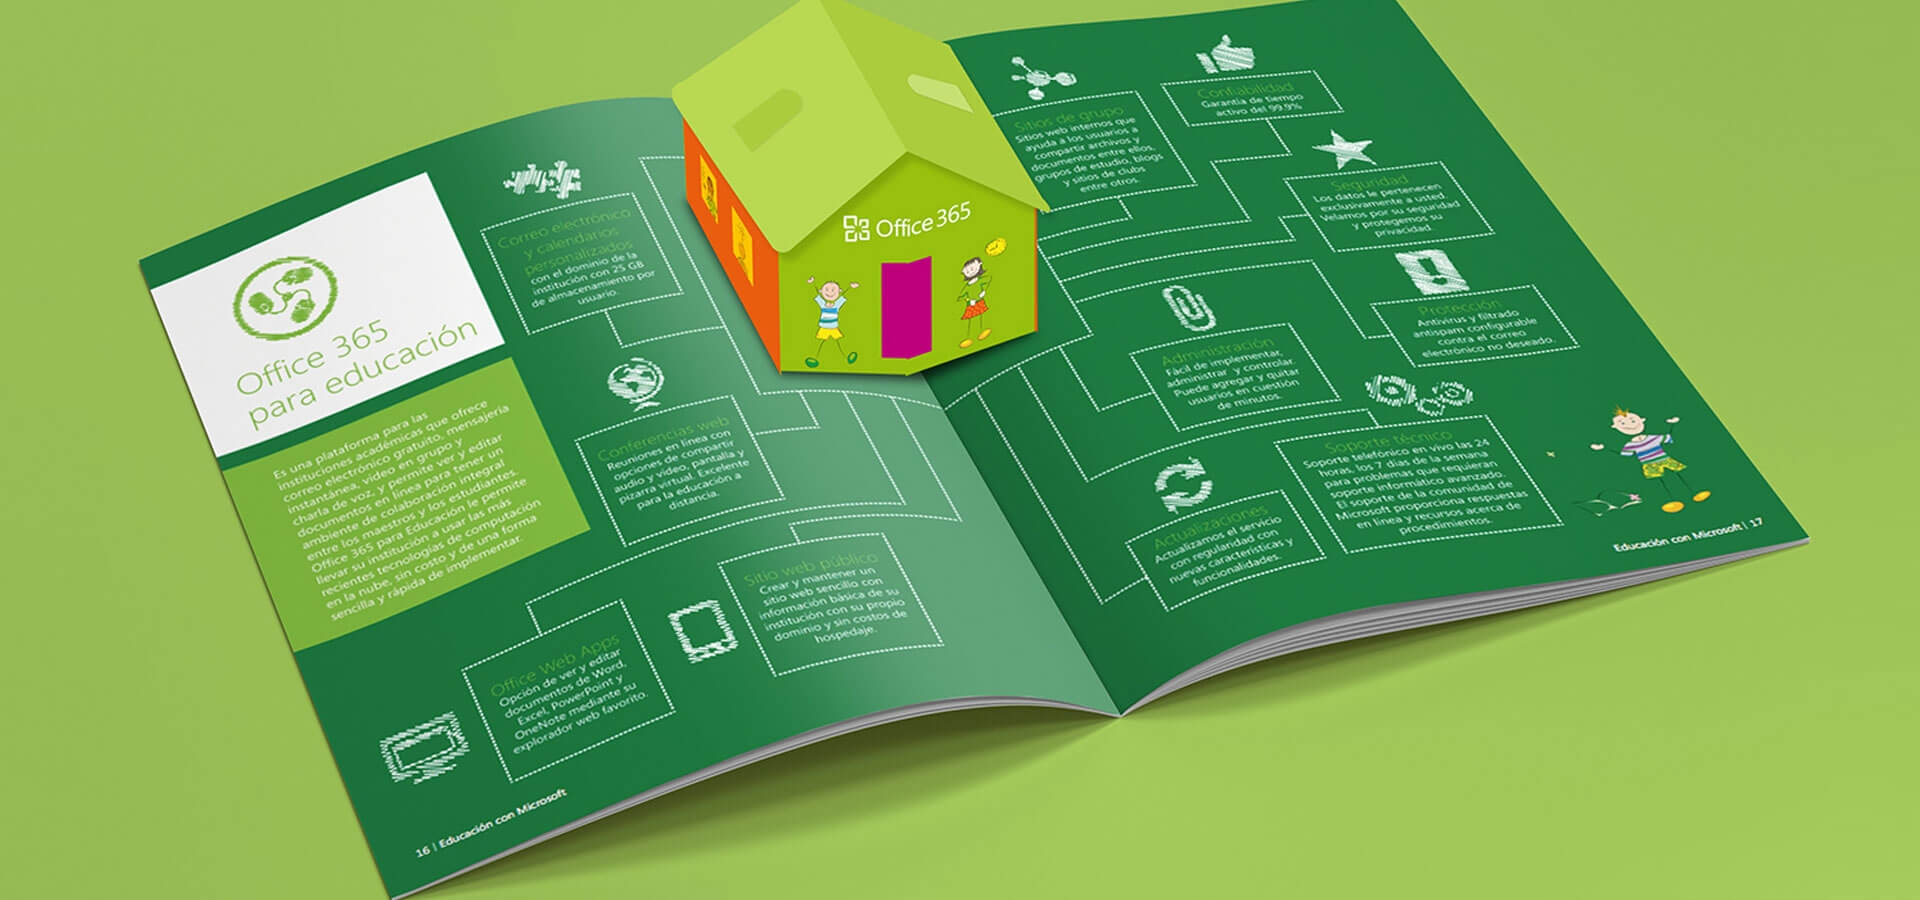 19+ 3D Pop Up Brochure Designs | Free & Premium Templates Throughout Pop Up Brochure Template